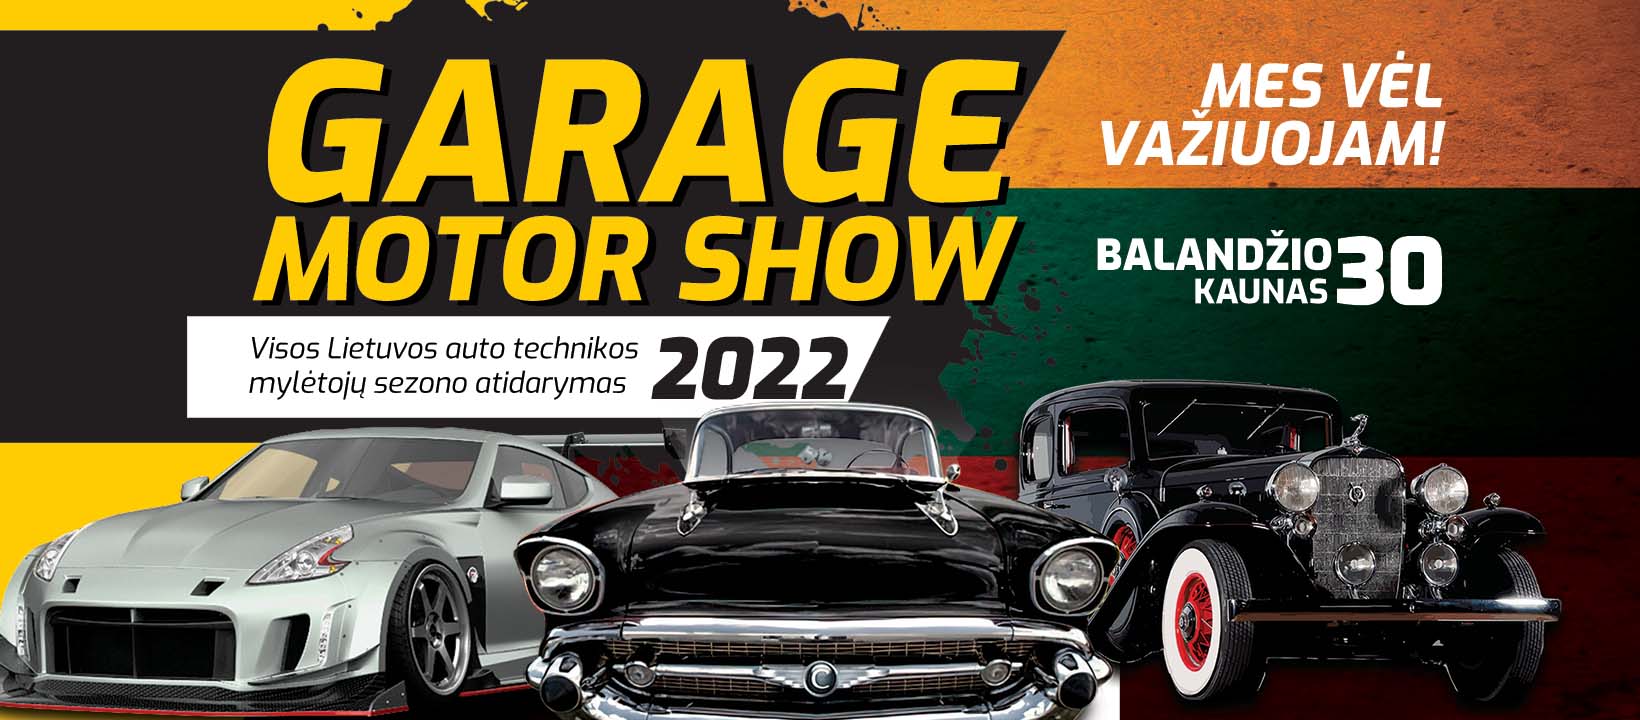 Garage Motor Show 2022